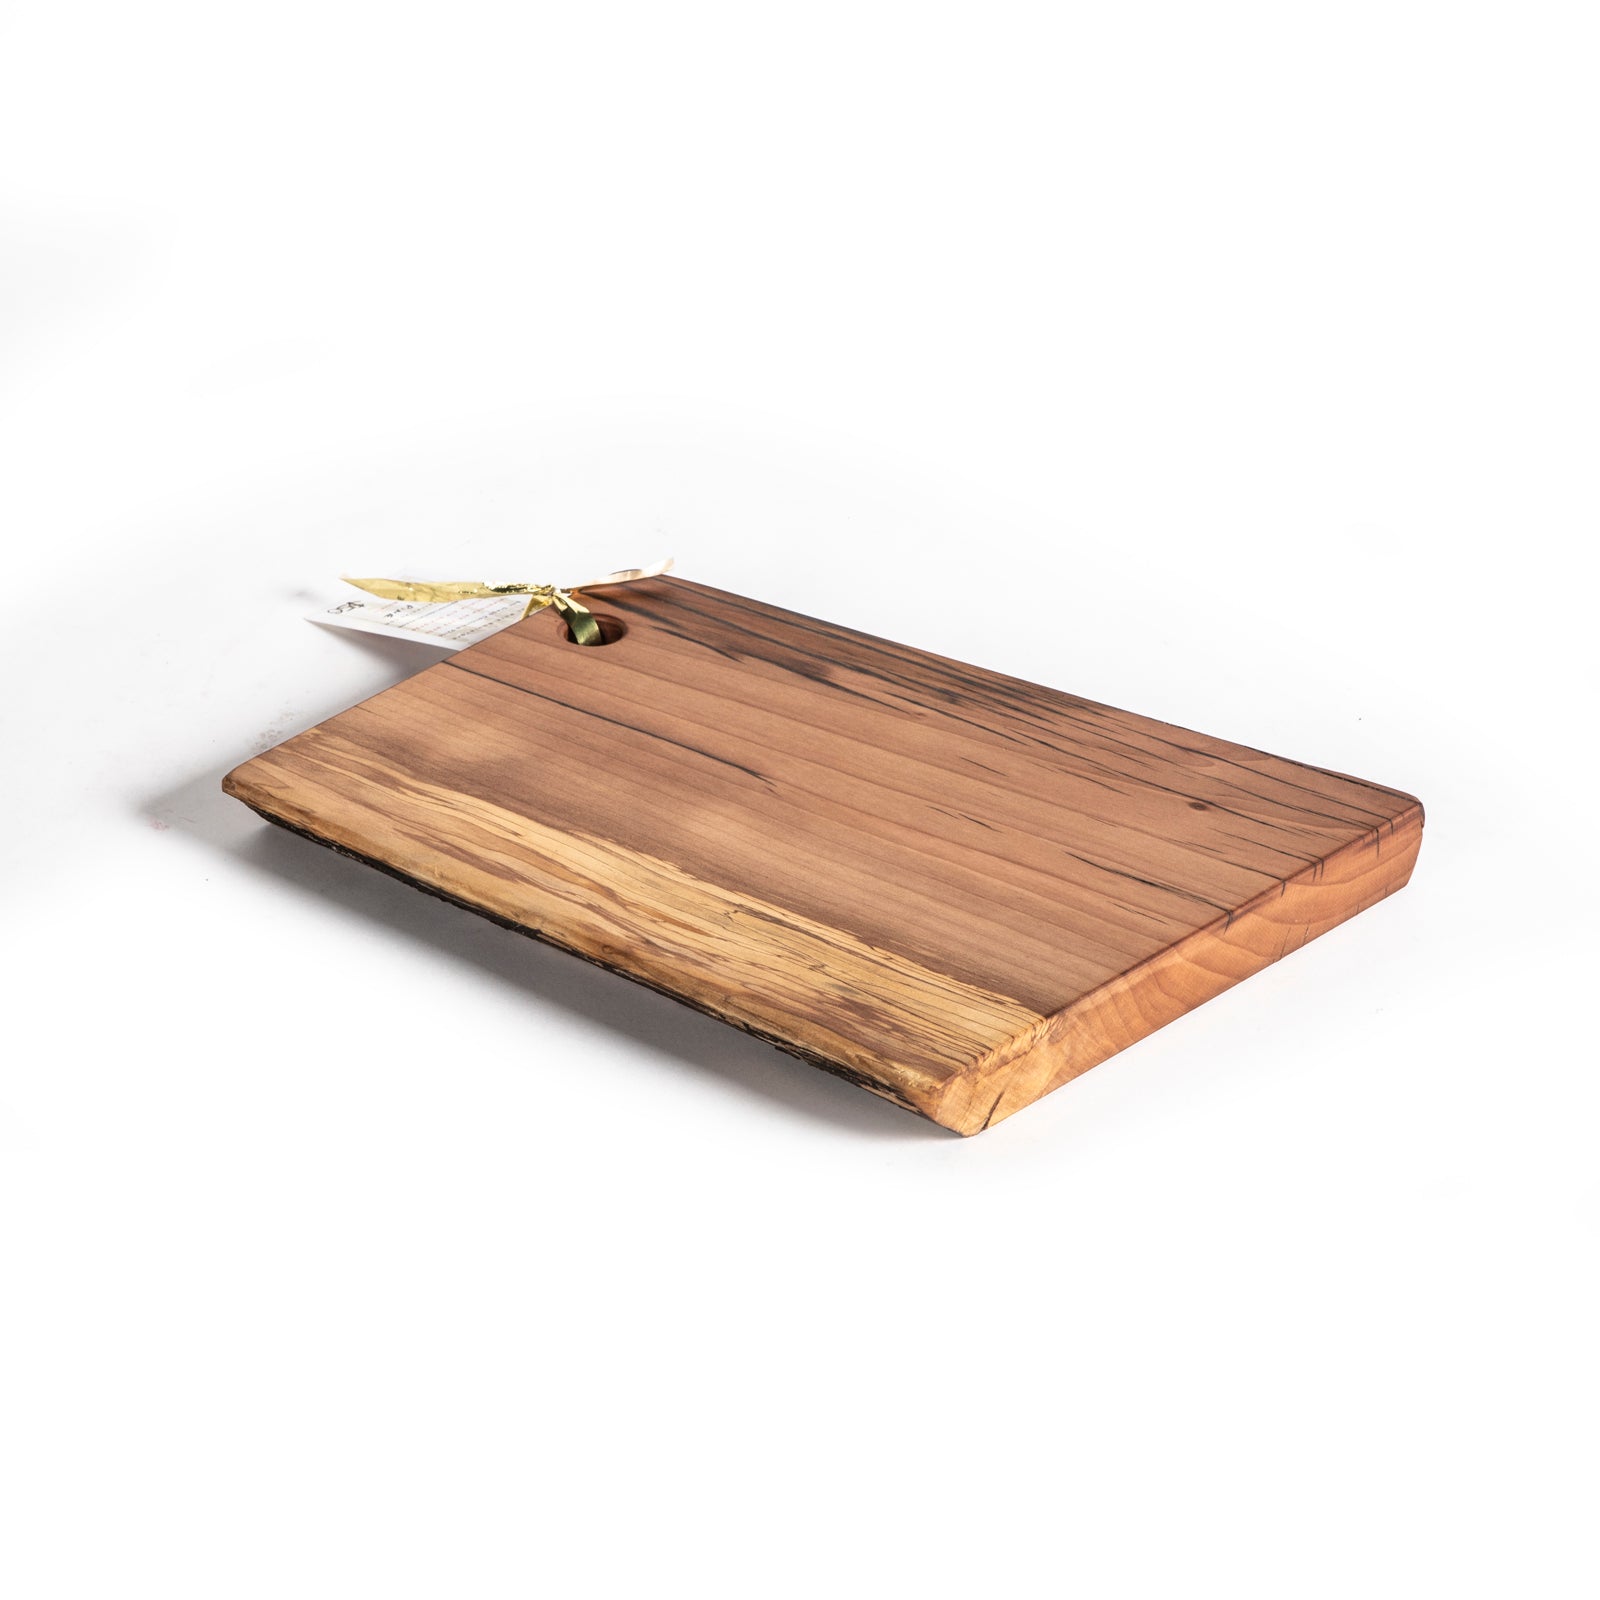 039 Torrey Pine Cutting Board